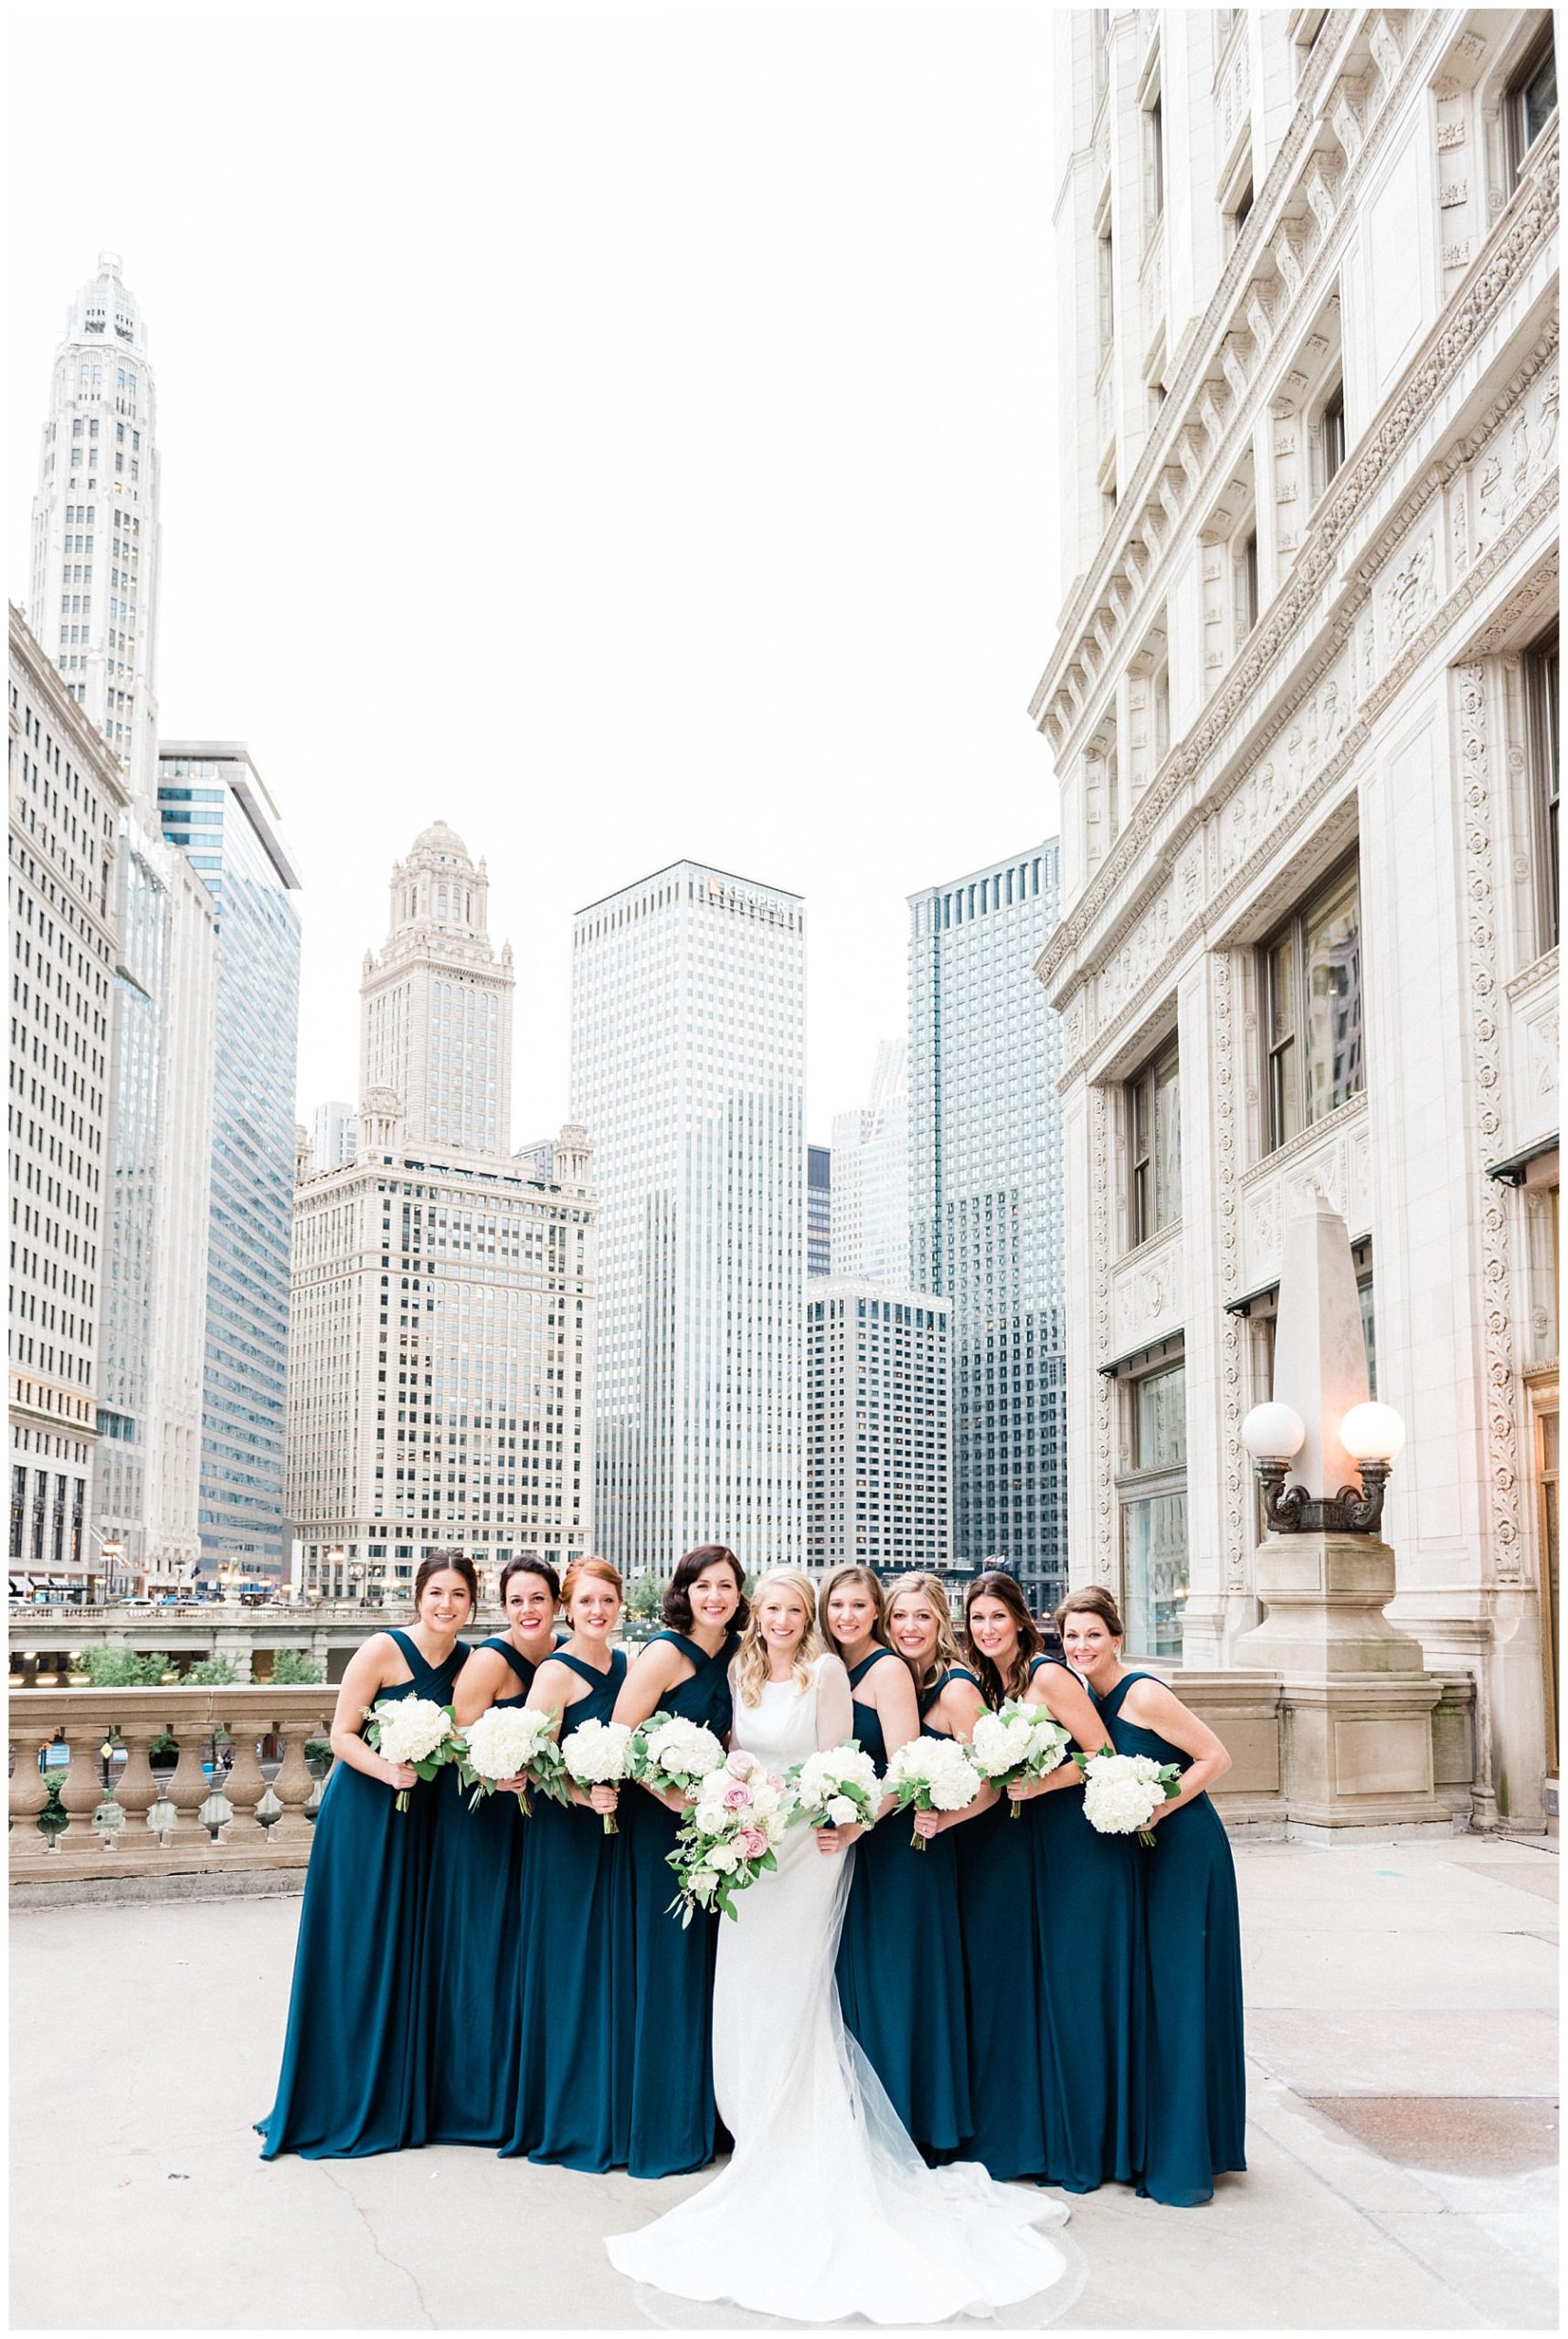 bride and bridesmaids bouquets at michigan street bridge in chicago